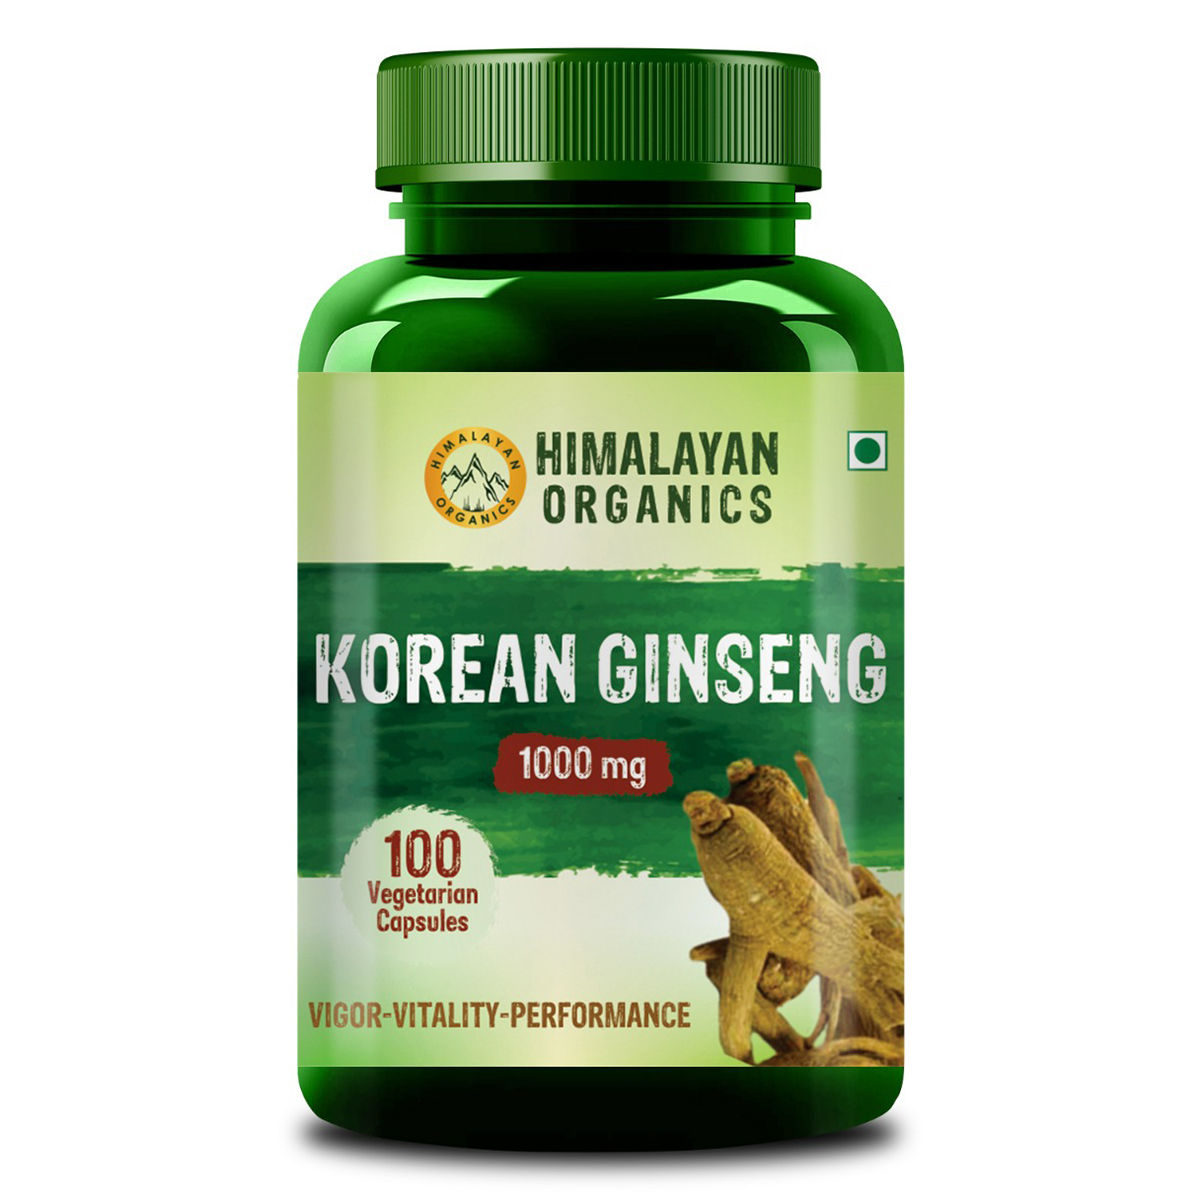 Buy Himalayan Organics Korean Ginseng 1000 mg, 100 Capsules Online